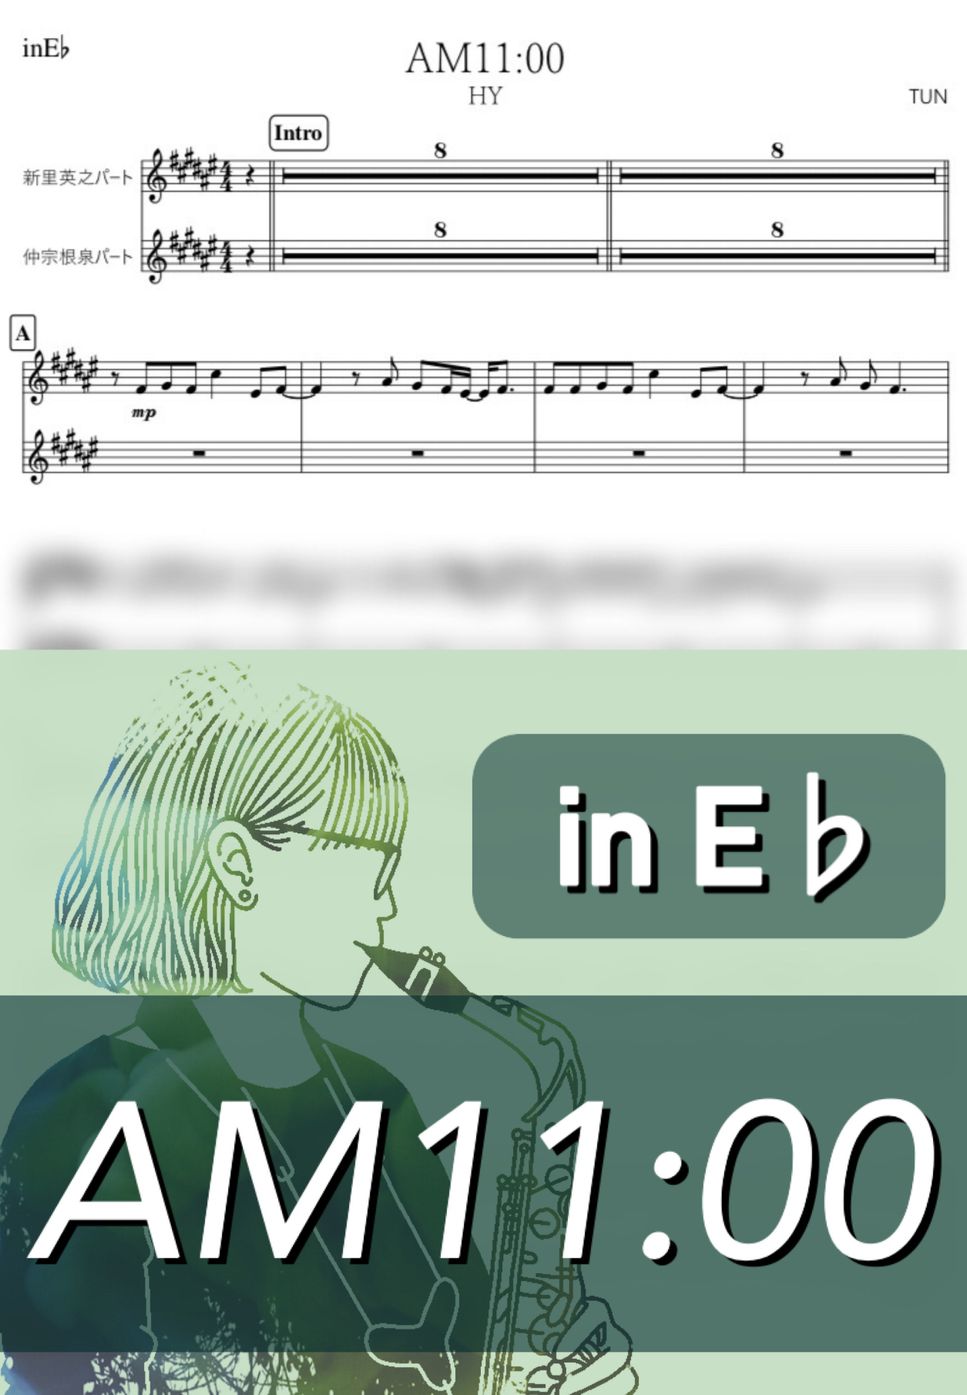 HY - AM11:00 (E♭) by kanamusic